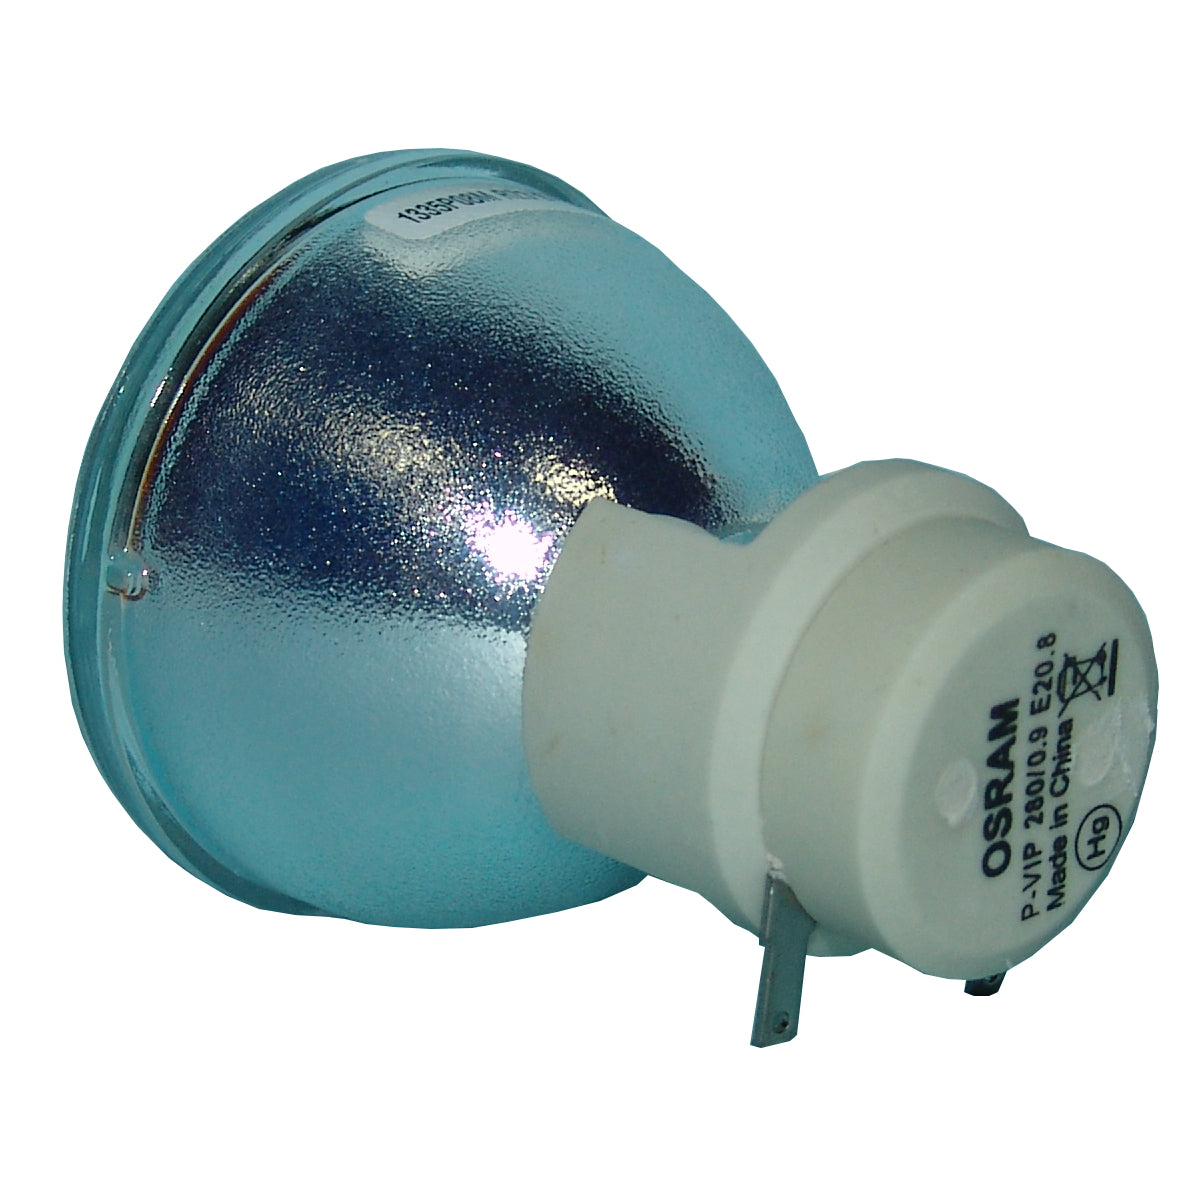 InFocus SP-LAMP-088 Osram Projector Bare Lamp